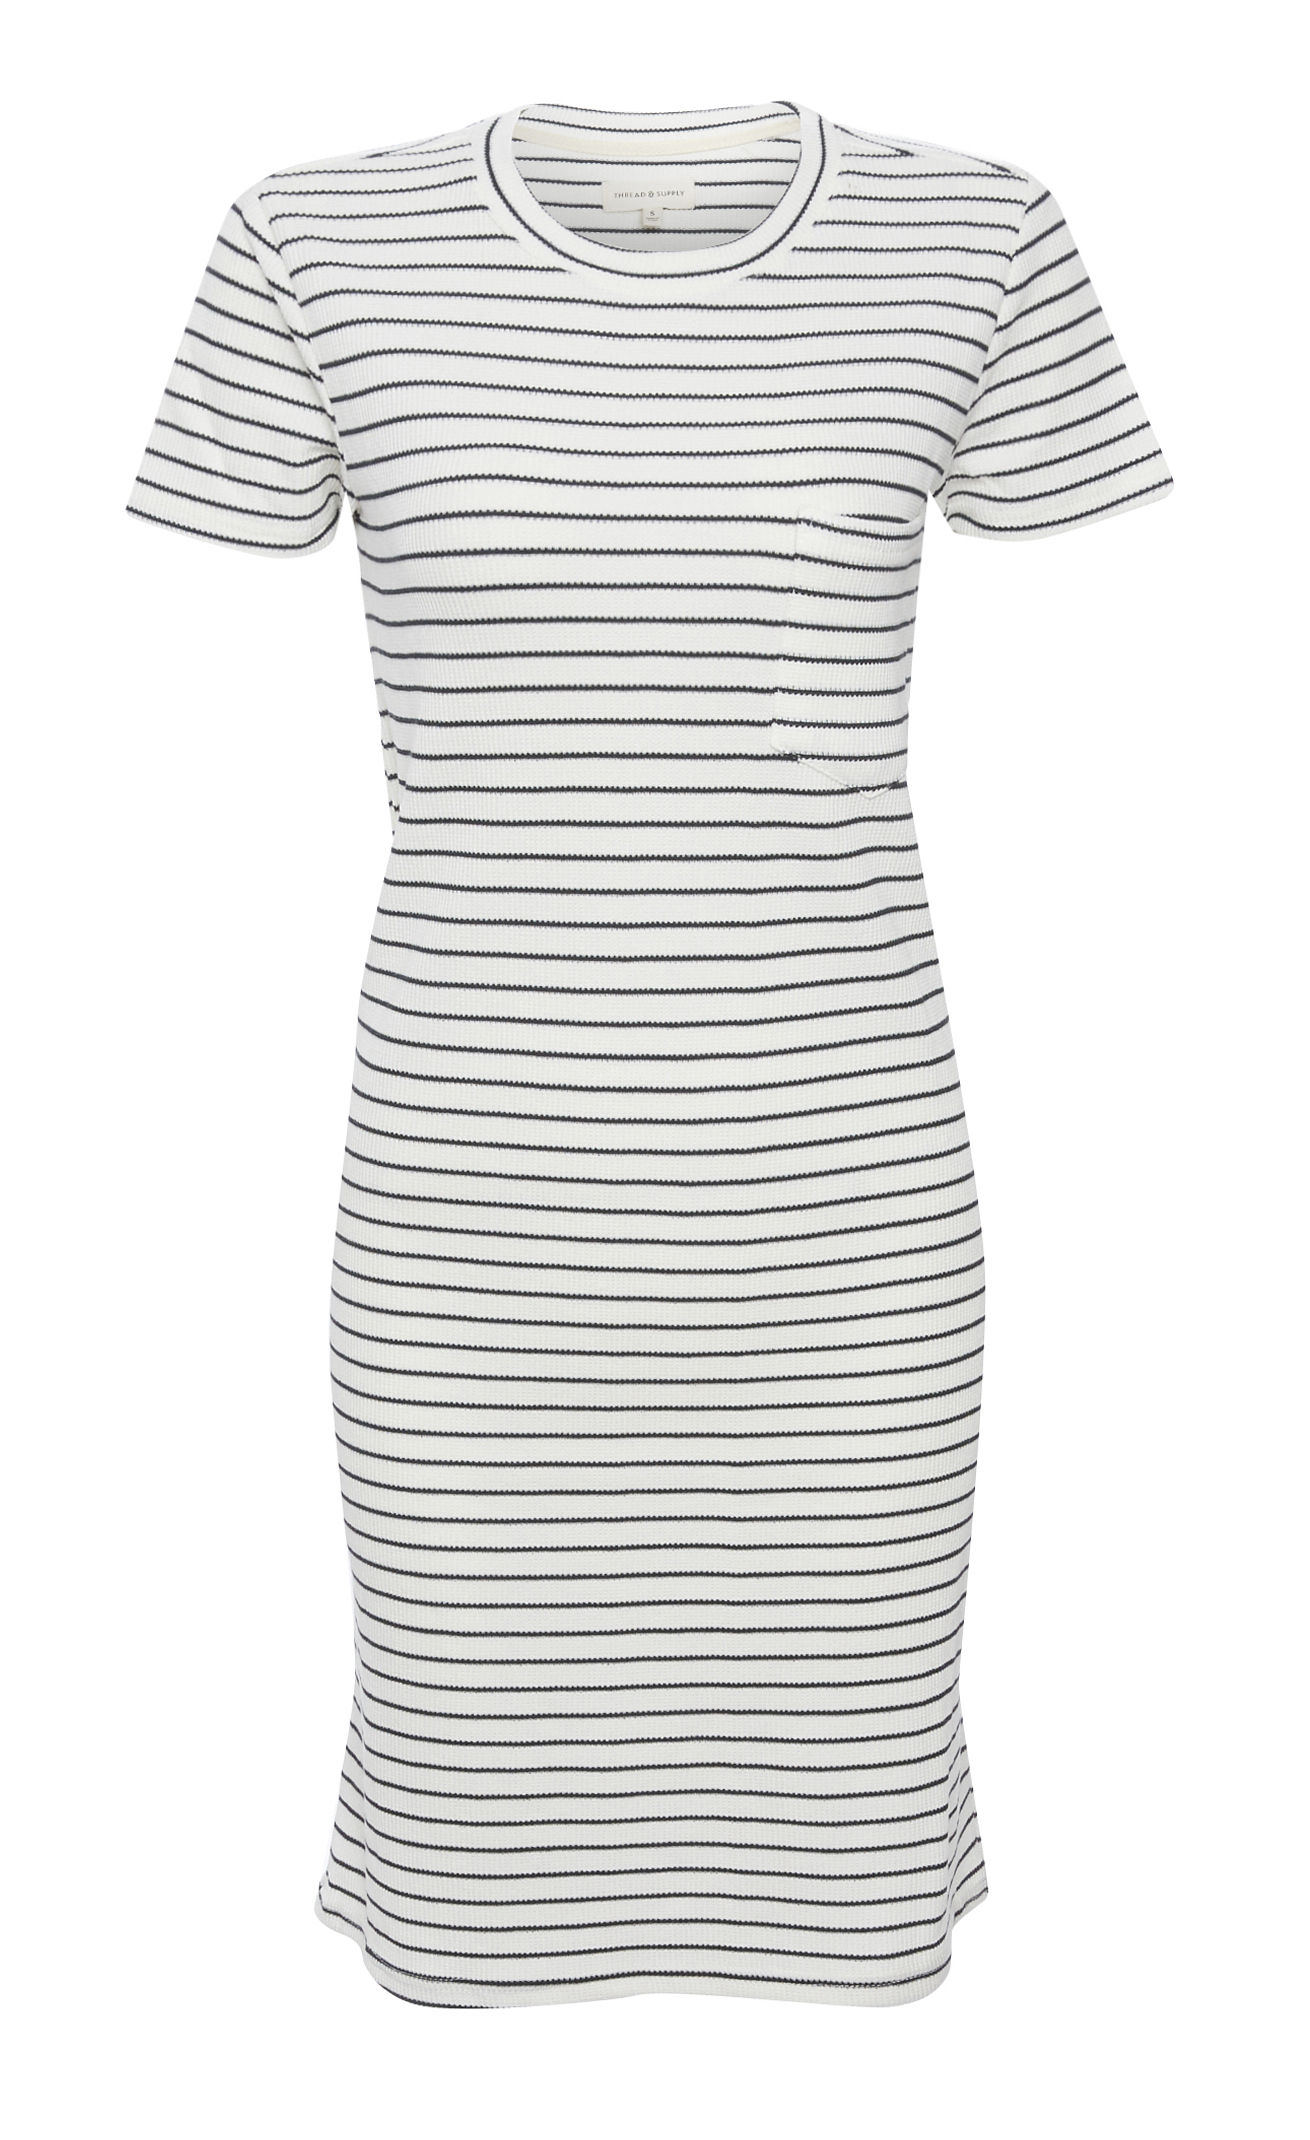 Thread & Supply Short Sleeve Striped Dress